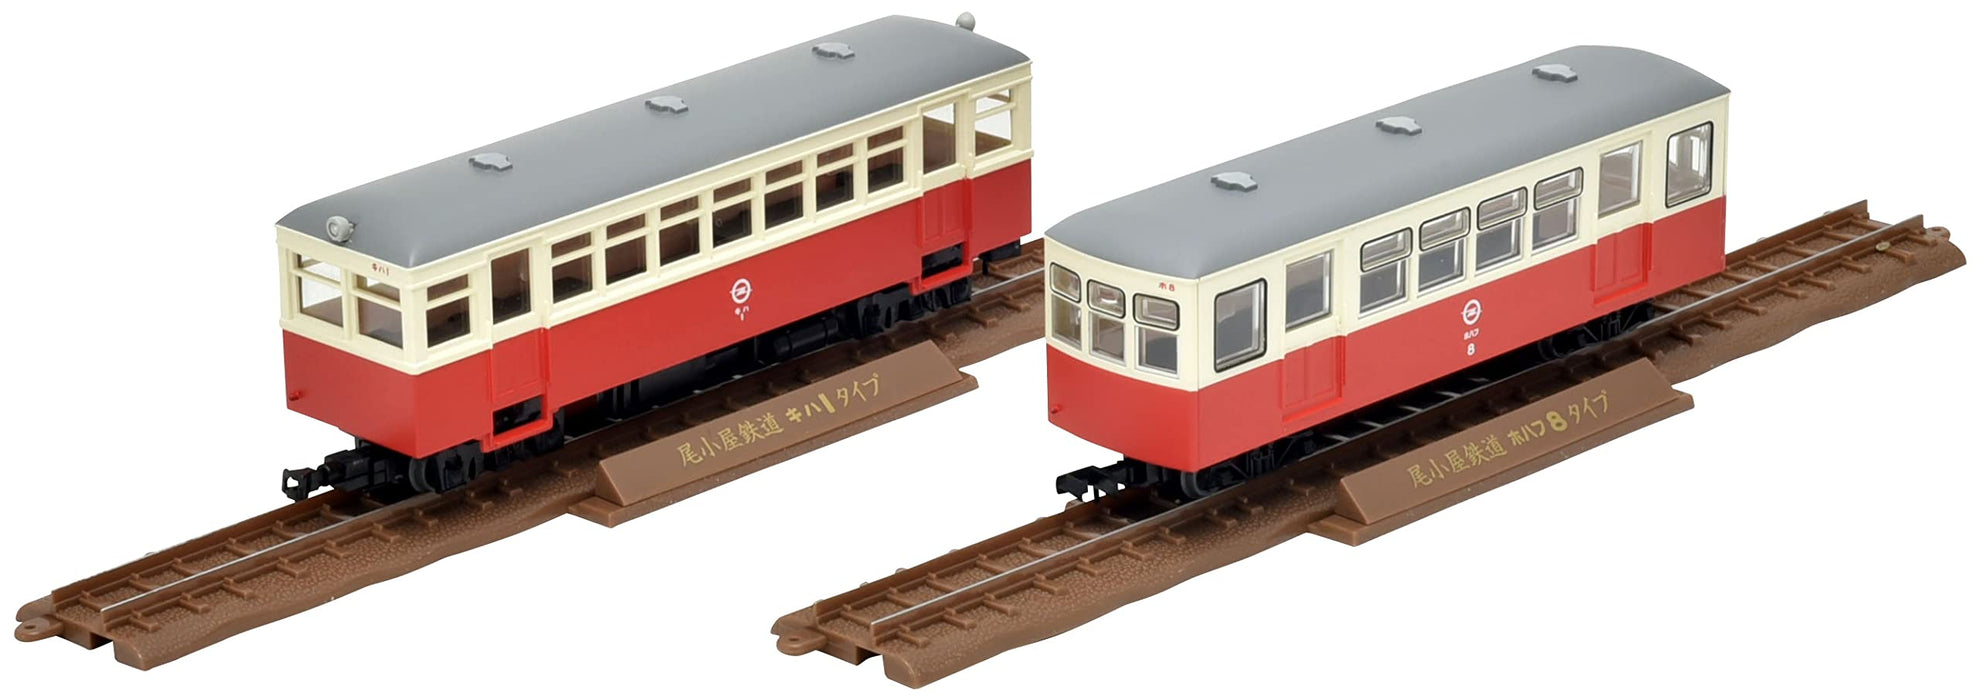 Tomytec Railway Collection Tetsukore Narrow Gauge 80 Memories Ogoya Railway Kiha 1 + Hohafu 8 2-Car Set Japan Diorama 315513